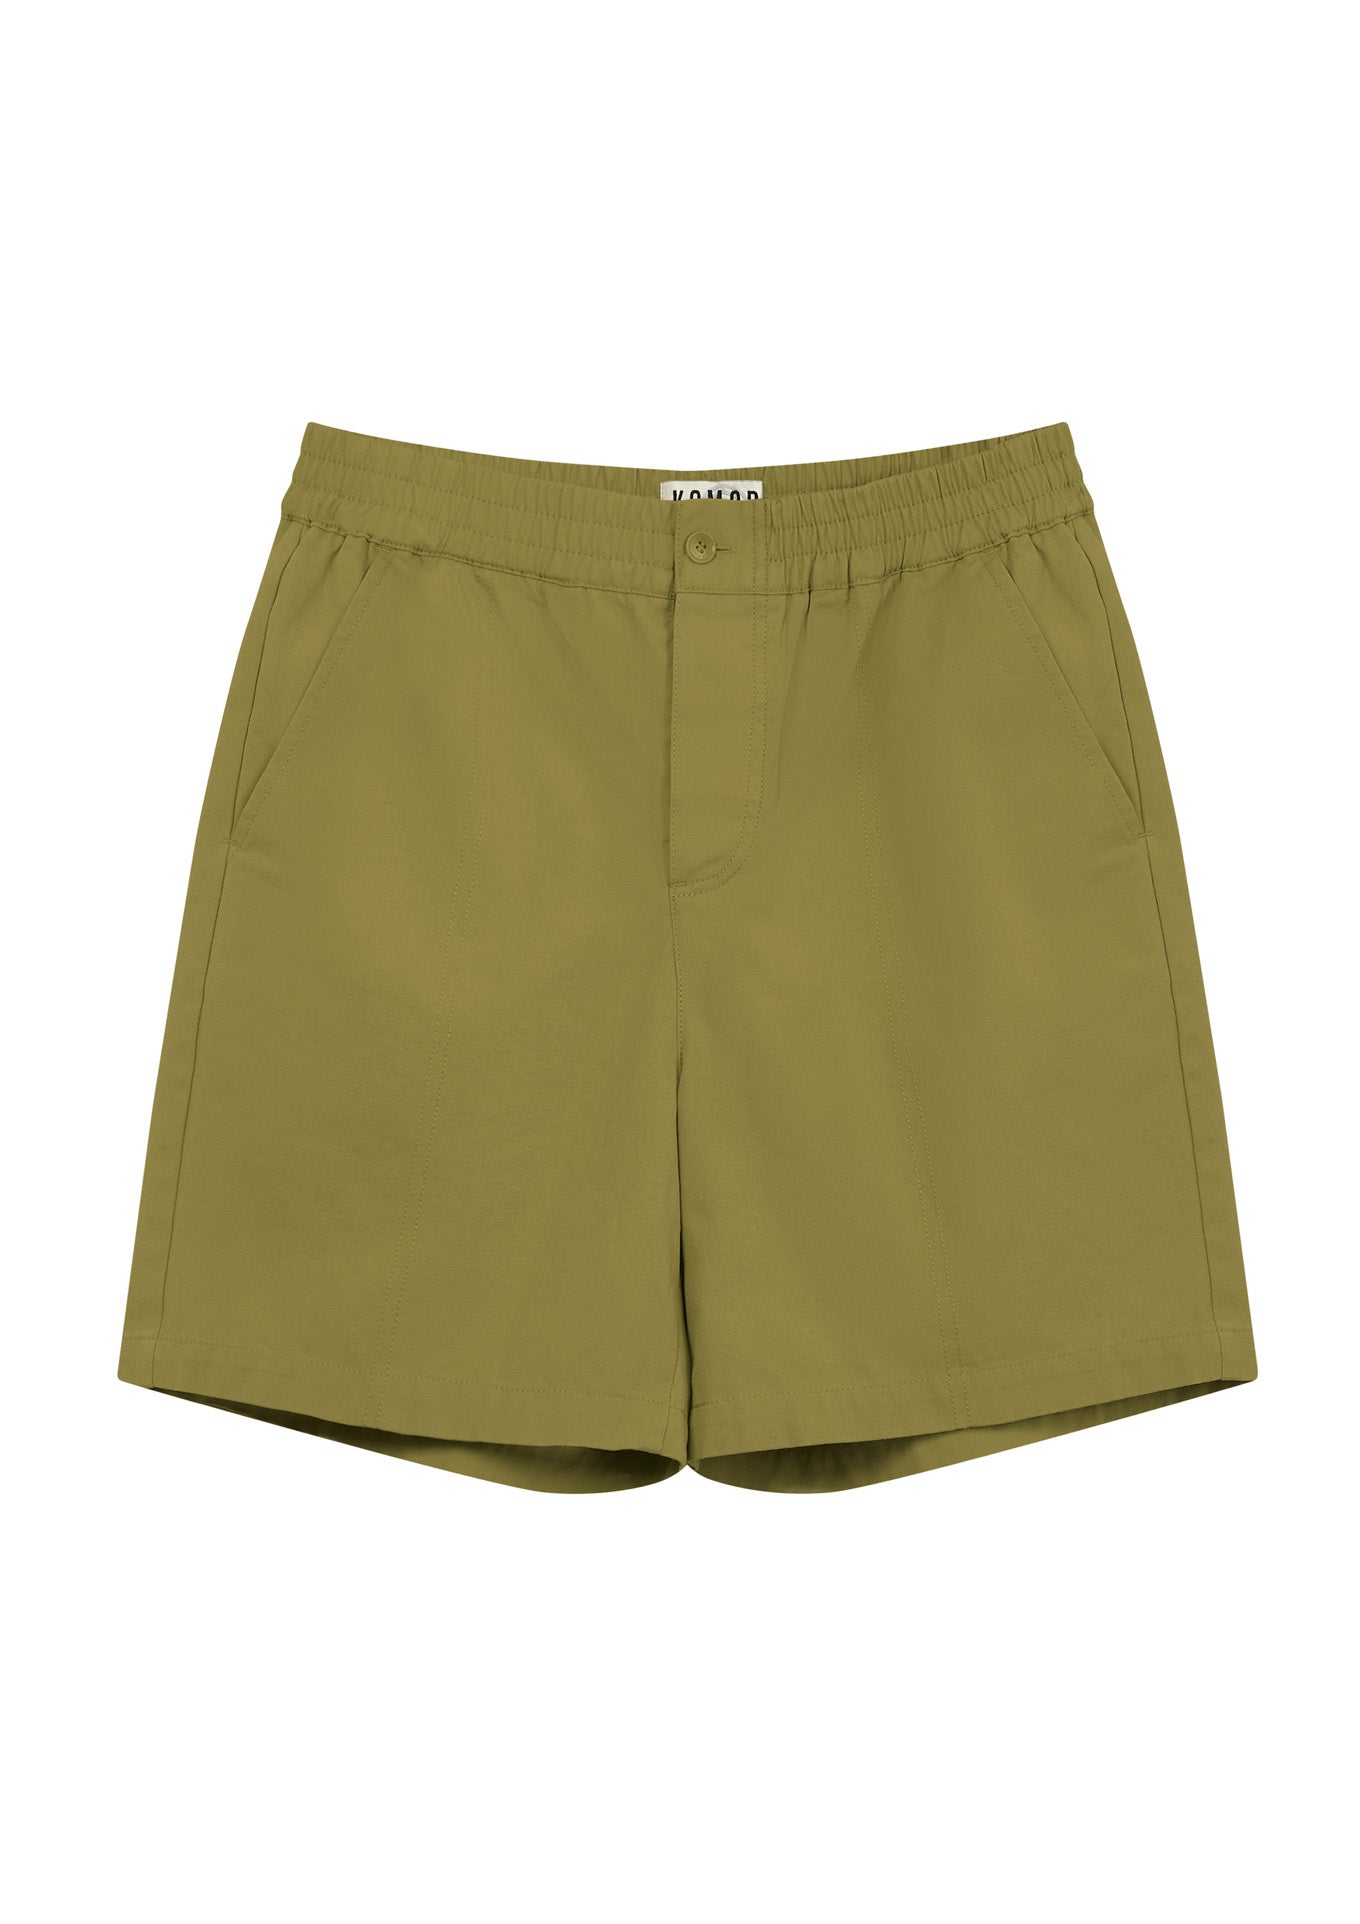 Khaki green Mario shorts made from 100% organic cotton from Komodo